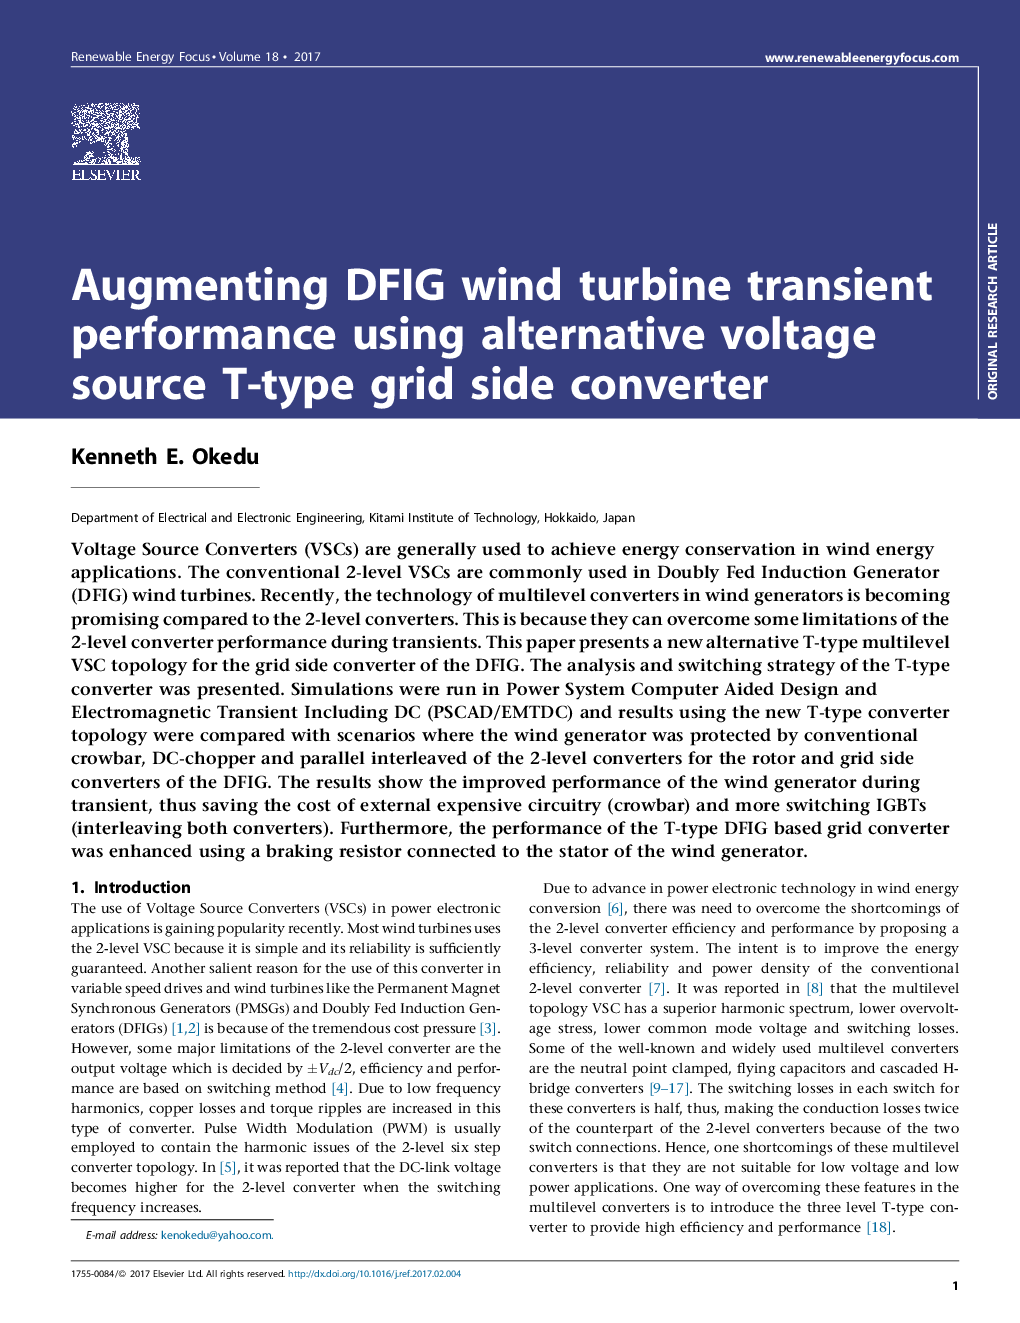 Augmenting DFIG wind turbine transient performance using alternative voltage source T-type grid side converter